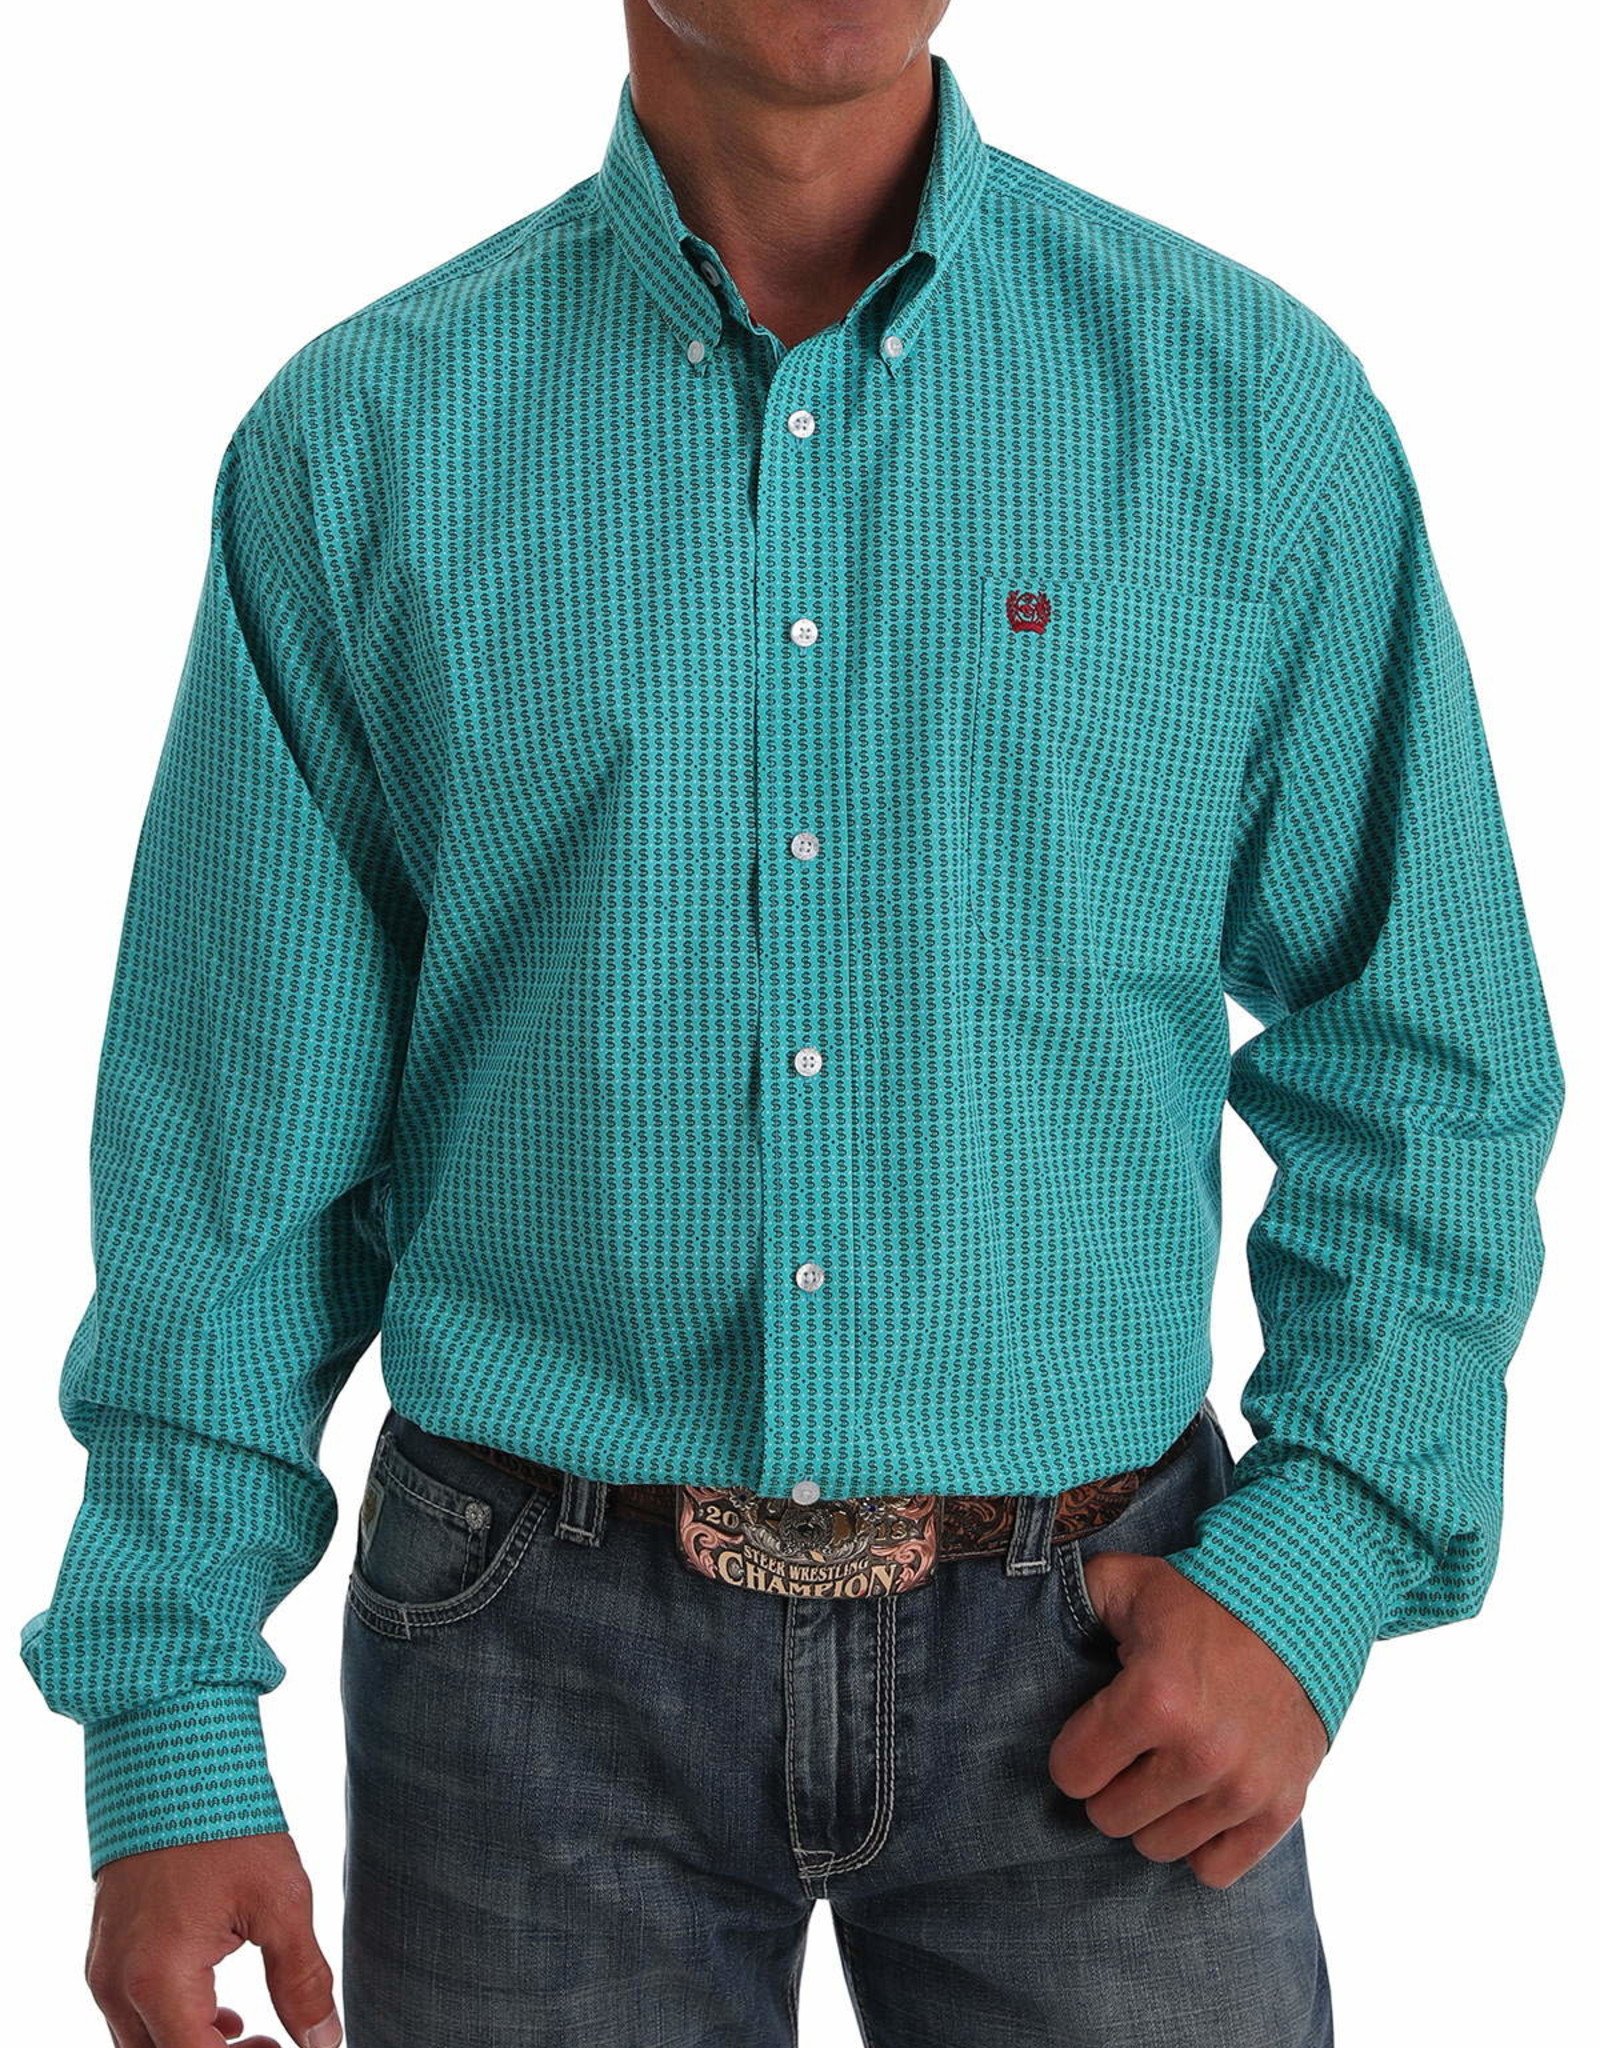 cinch turquoise shirt